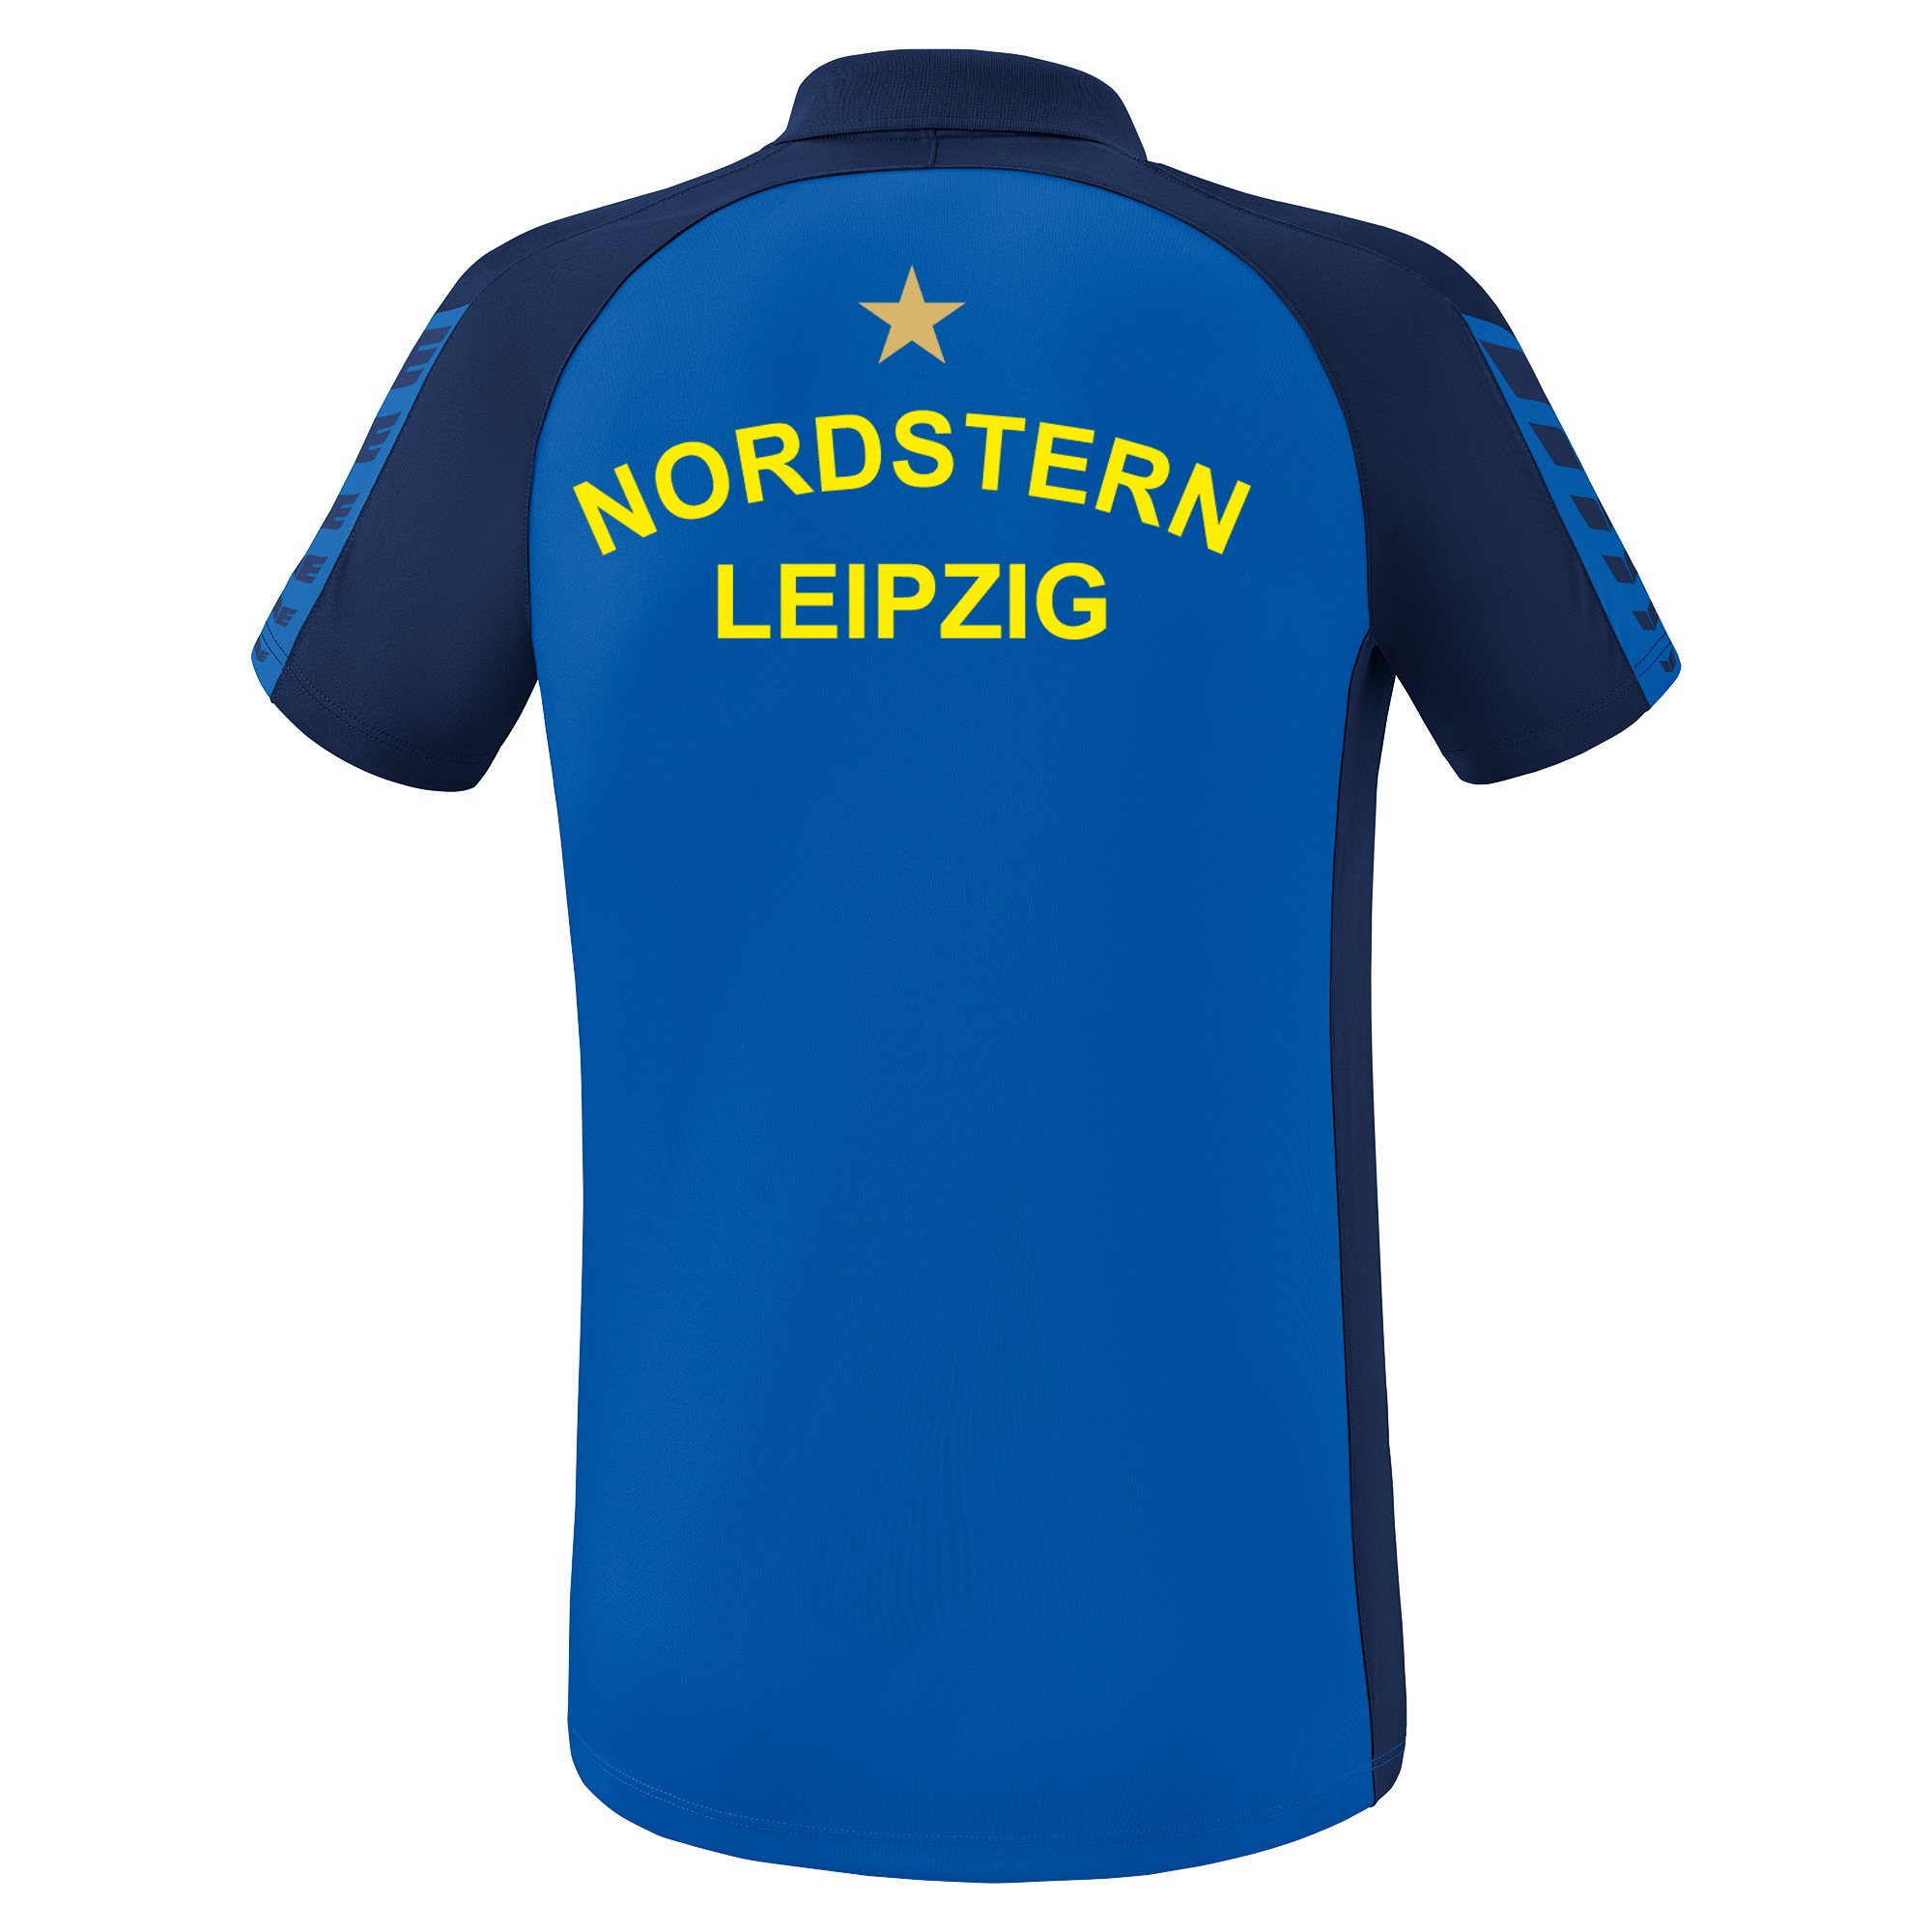 Nordstern Leipzig Poloshirt